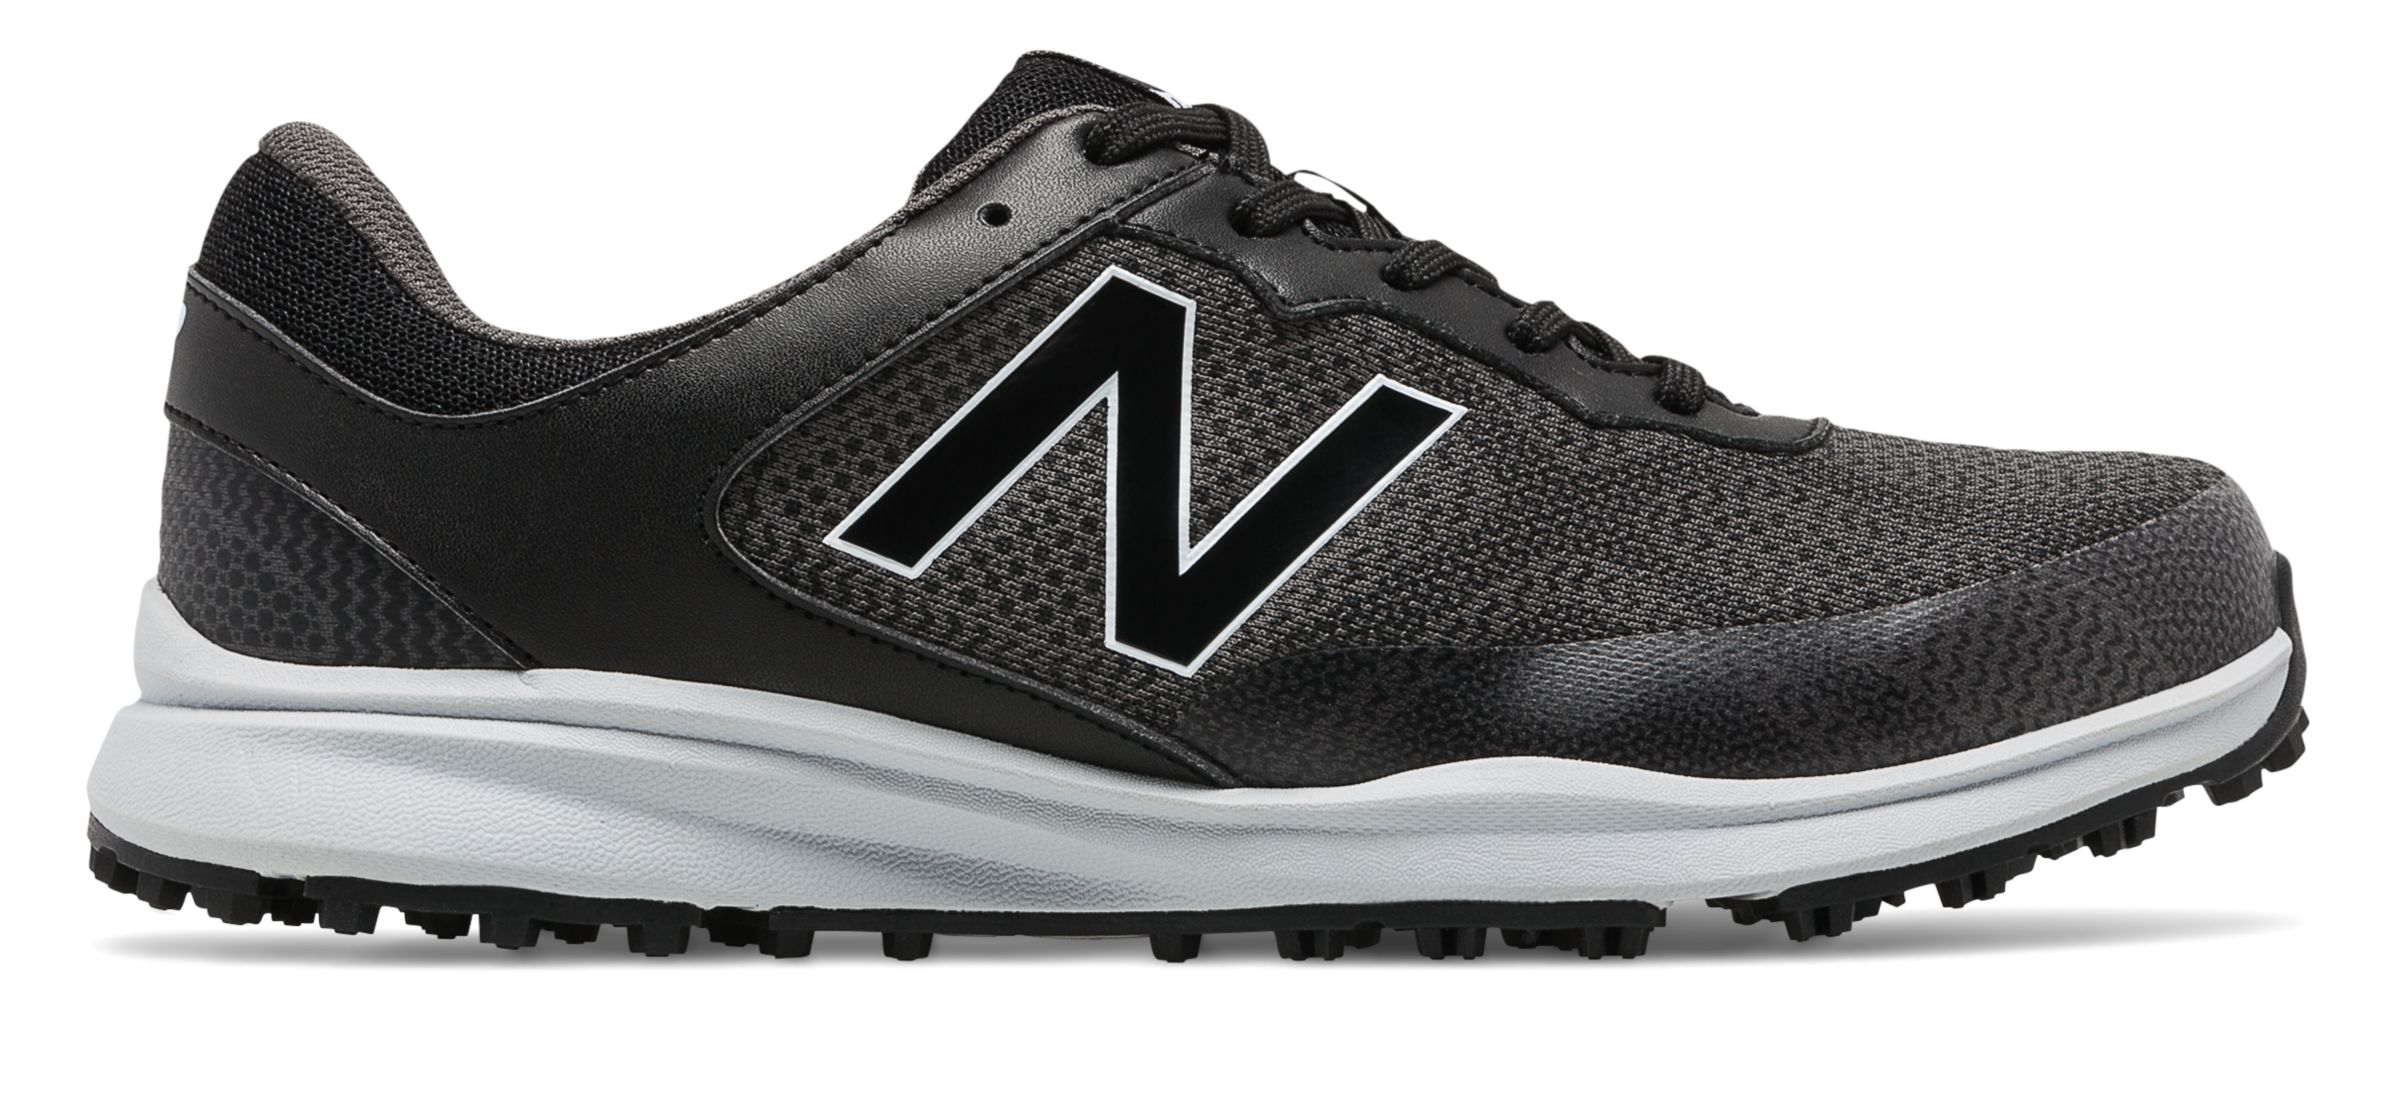 new balance golf shoes melbourne